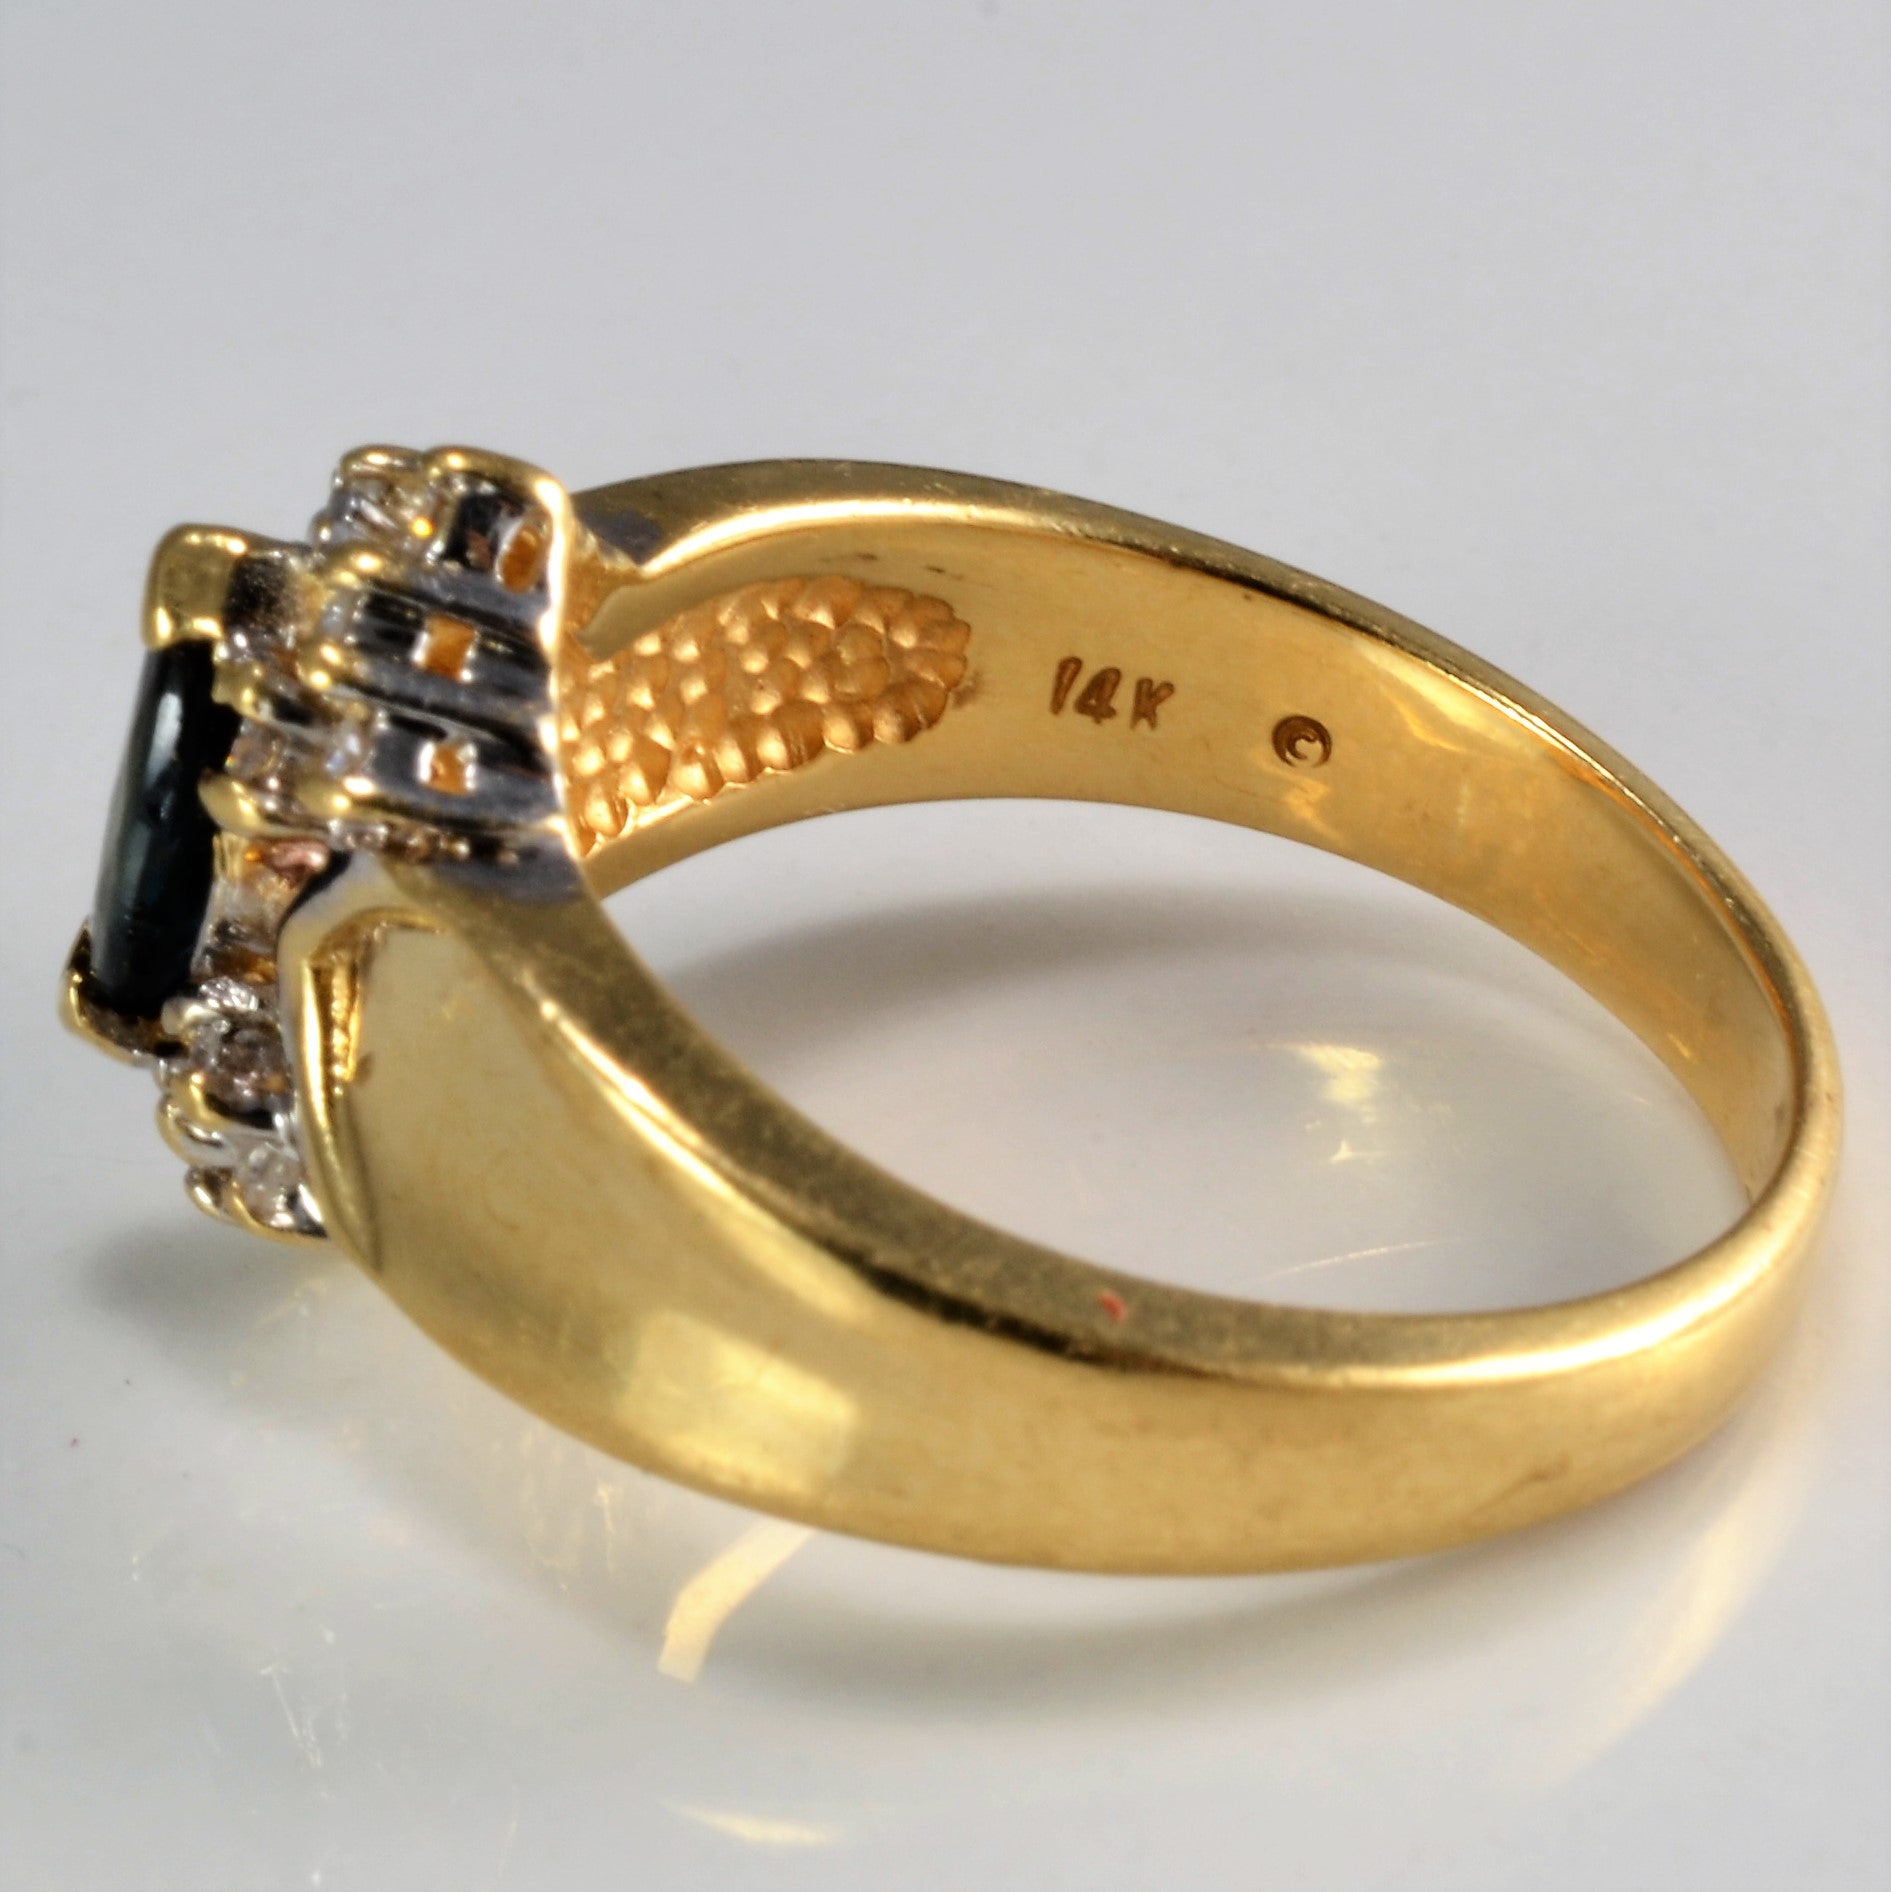 Offset Marquise Sapphire & Diamond Cocktail Ring | 0.14 ctw, SZ 6 |